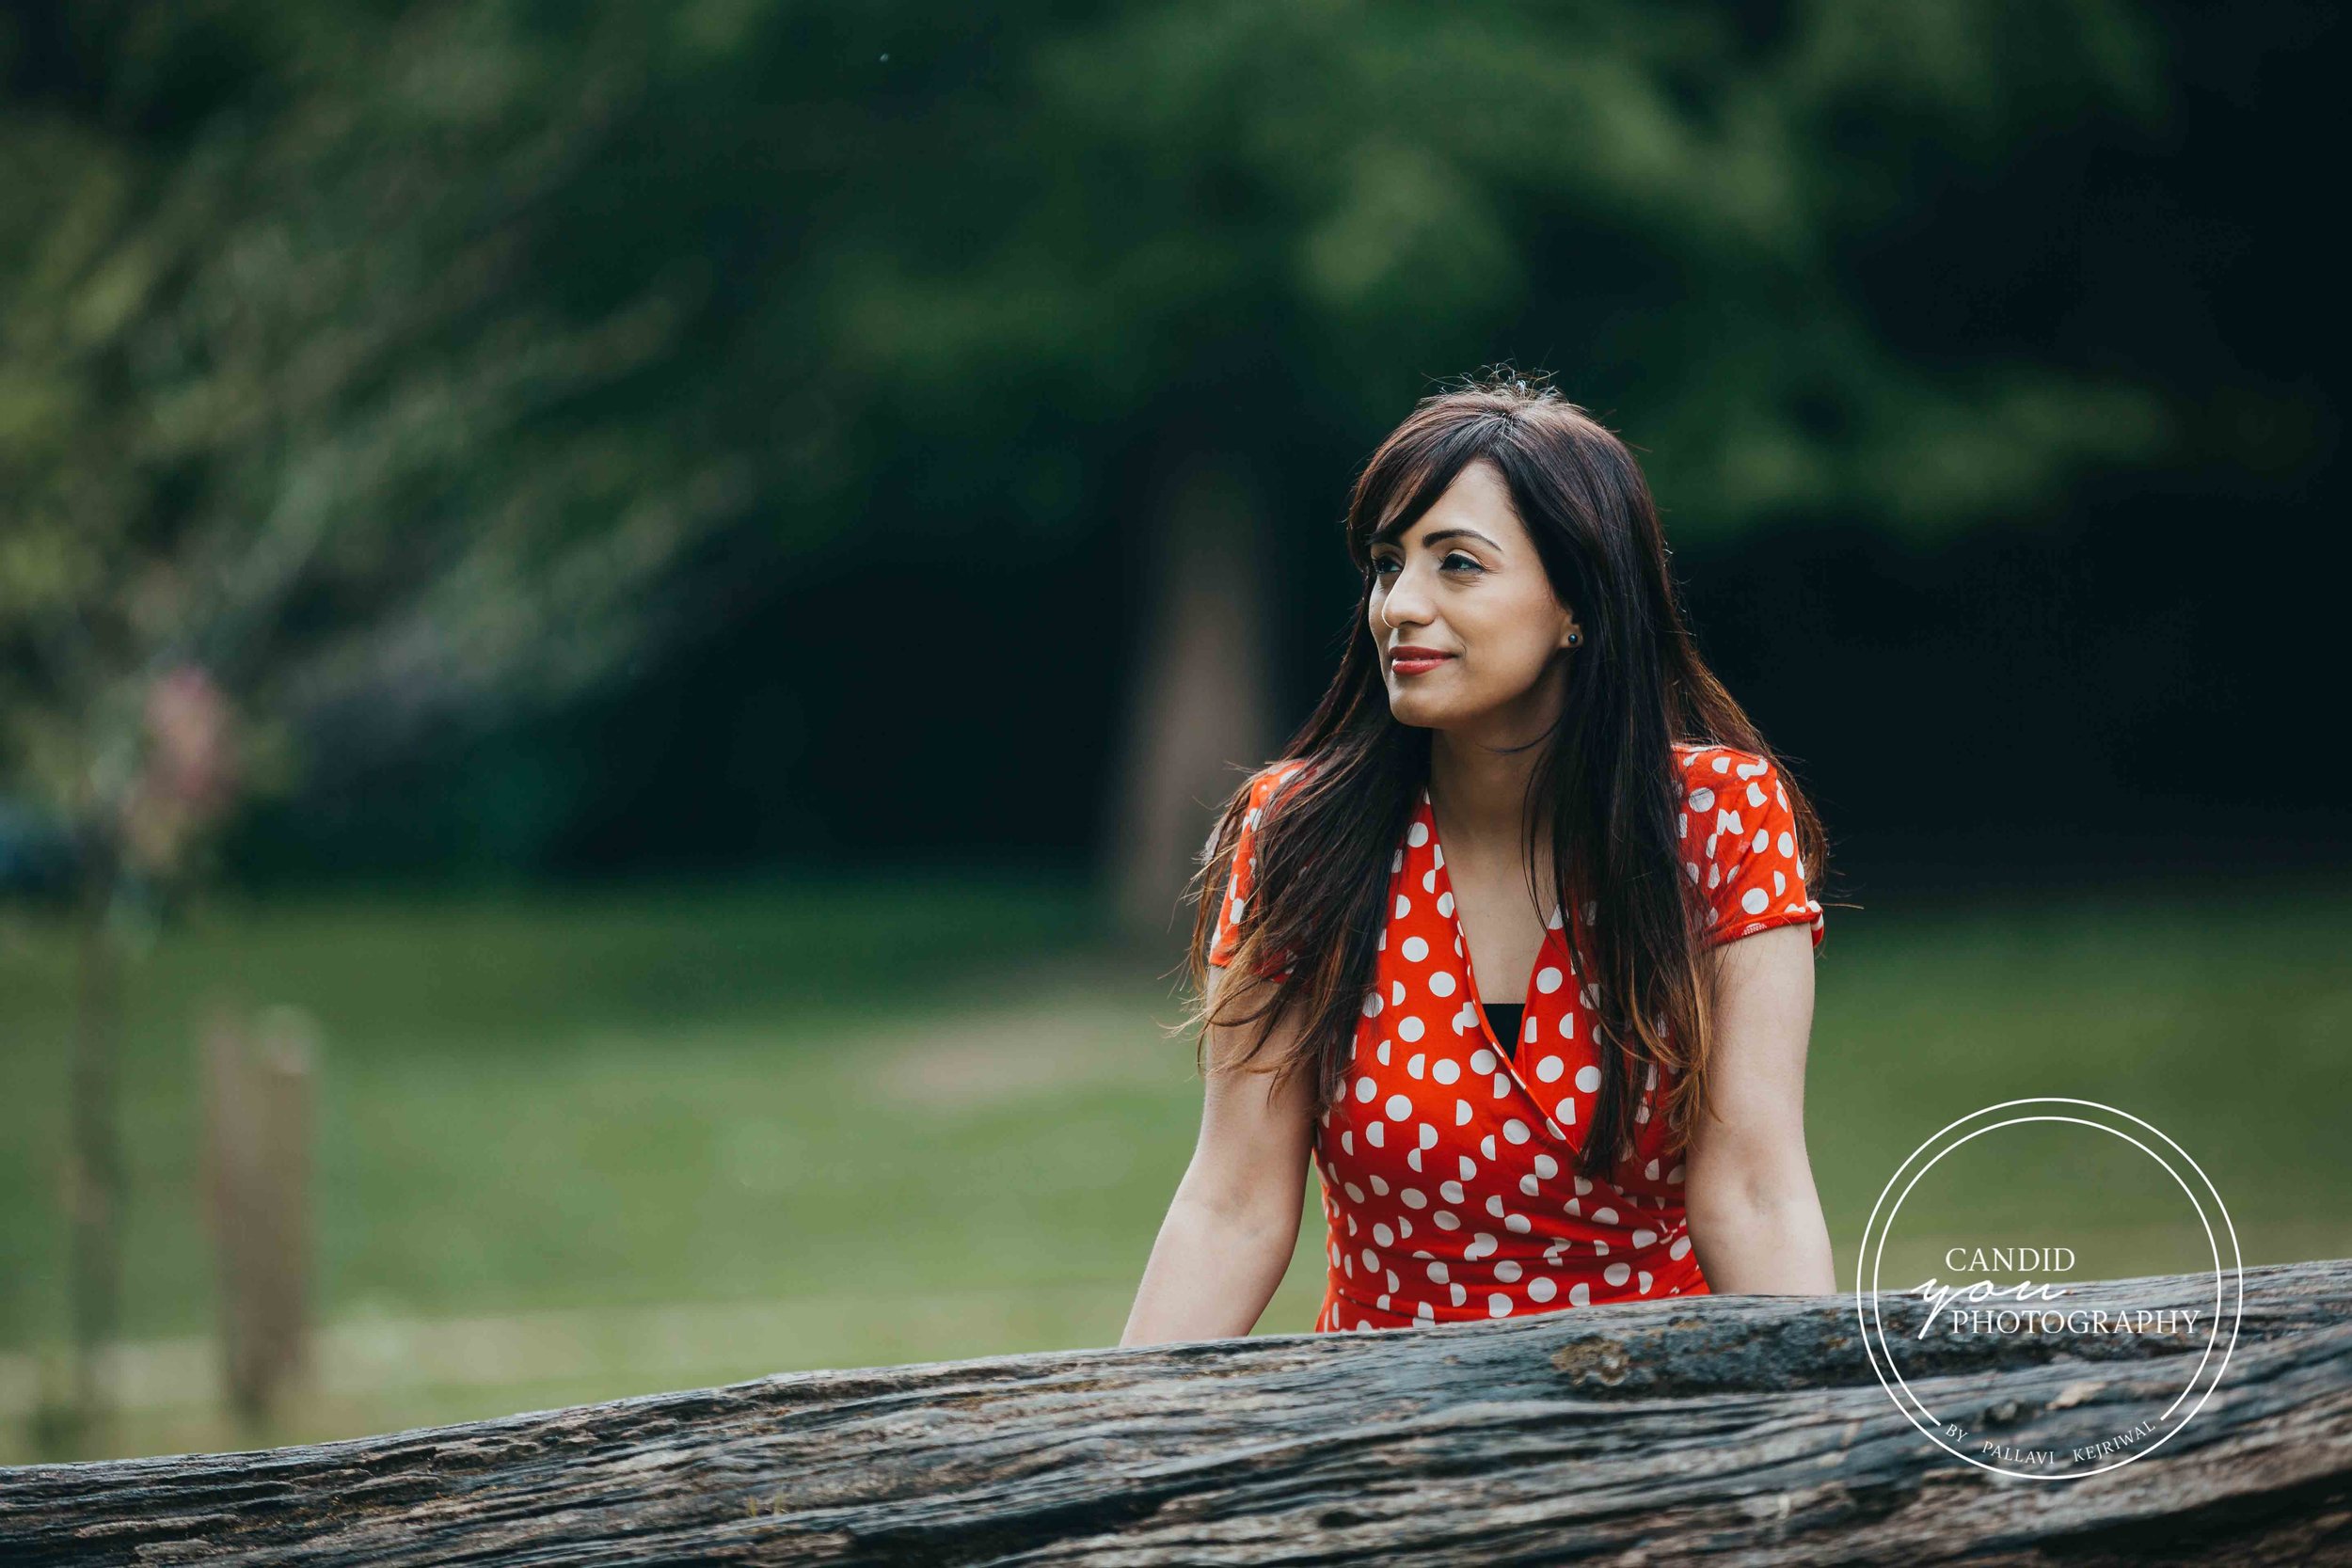 Beautiful woman in orange polka dot dress in park